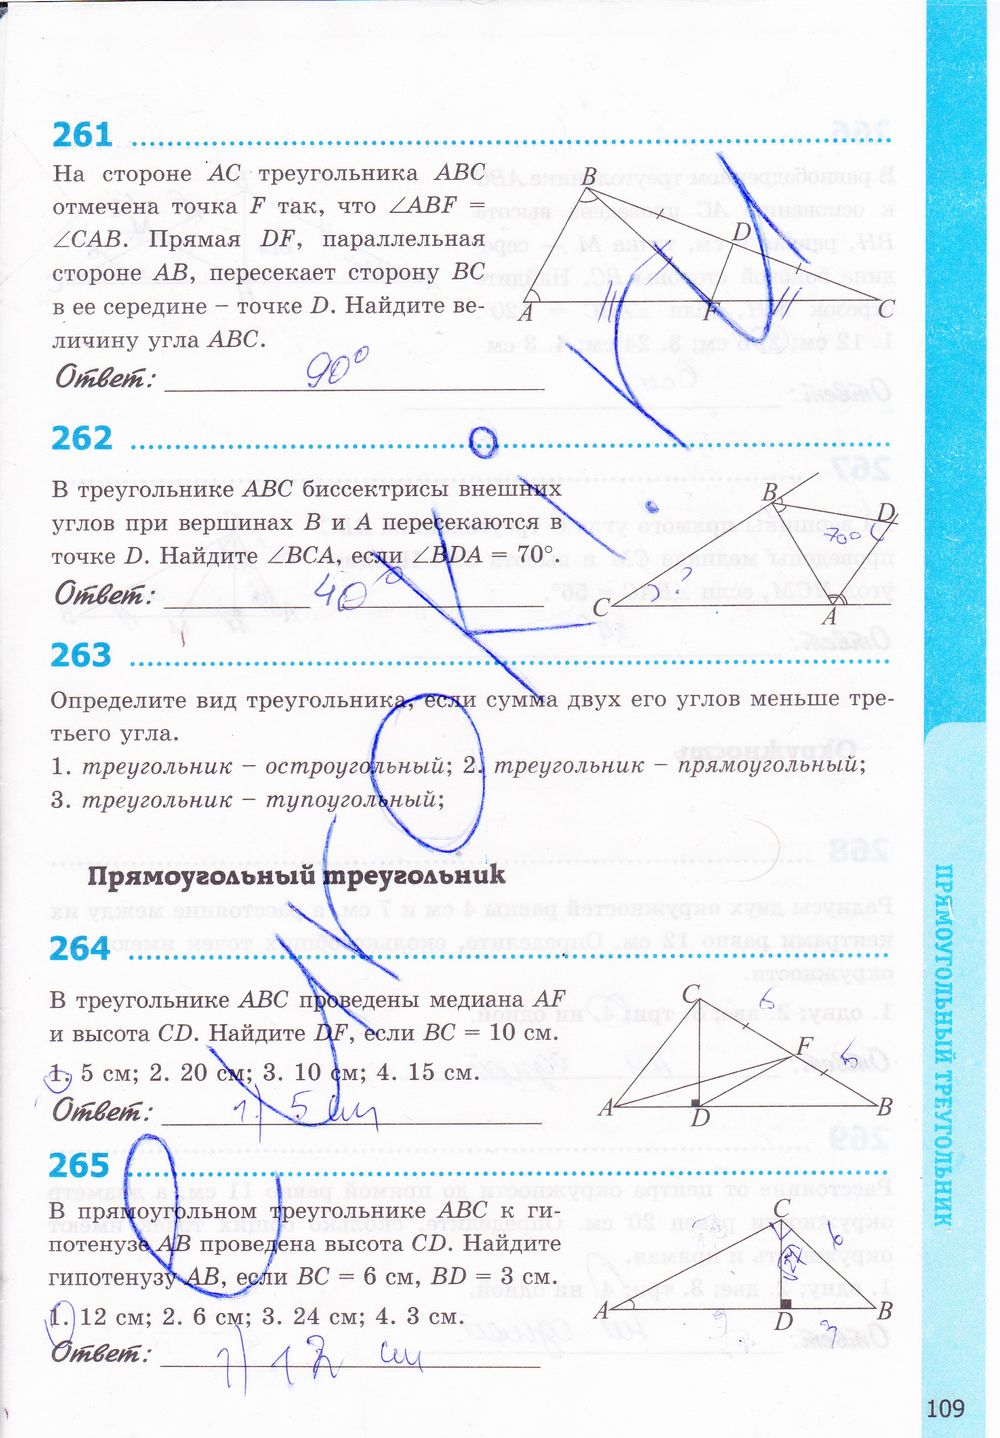 ГДЗ Геометрия 7 класс - стр. 109